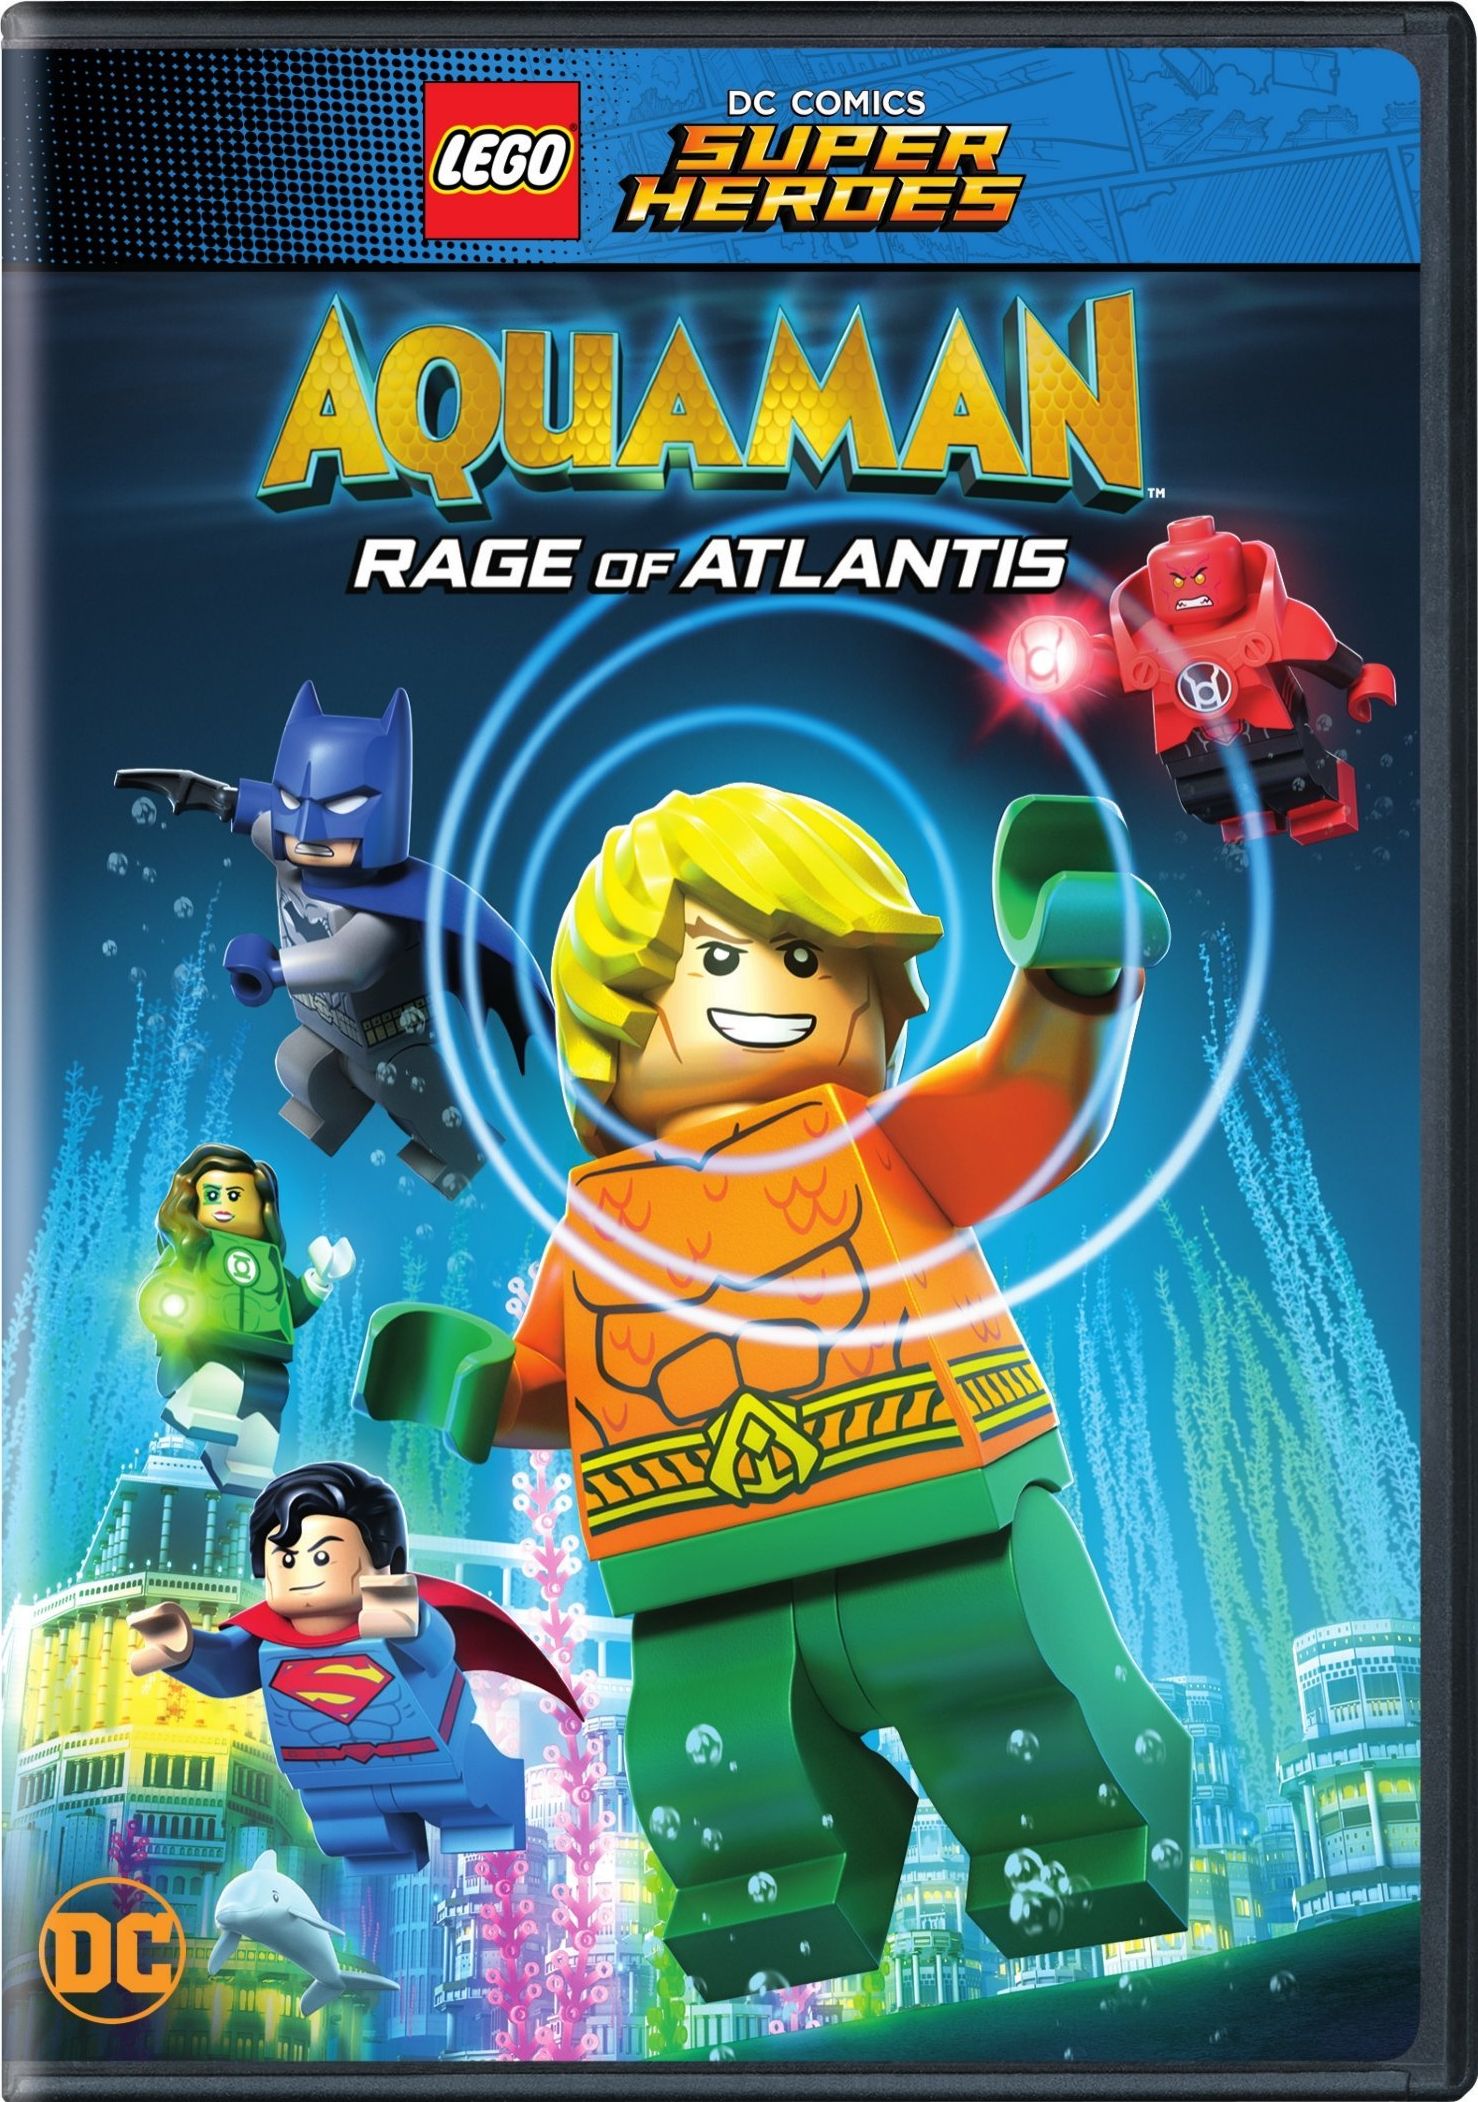 LEGO DC Comics Super Heroes: Aquaman - Rage of Atlantis DVD Release Date August 28, 2018